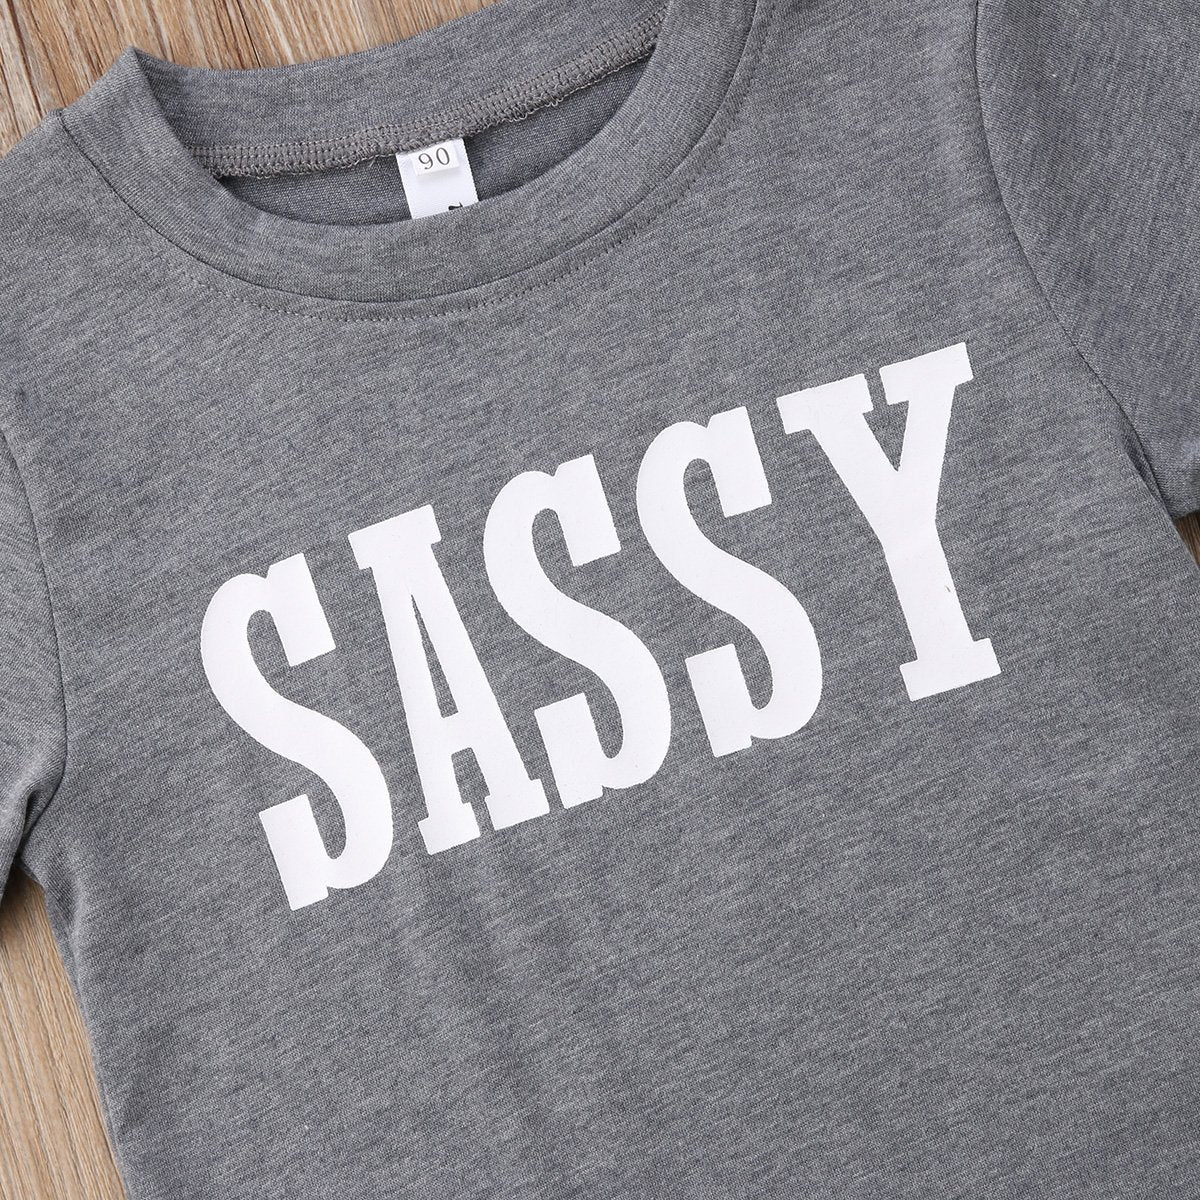 Kids Baby Boy Girl Sassy T-shirt